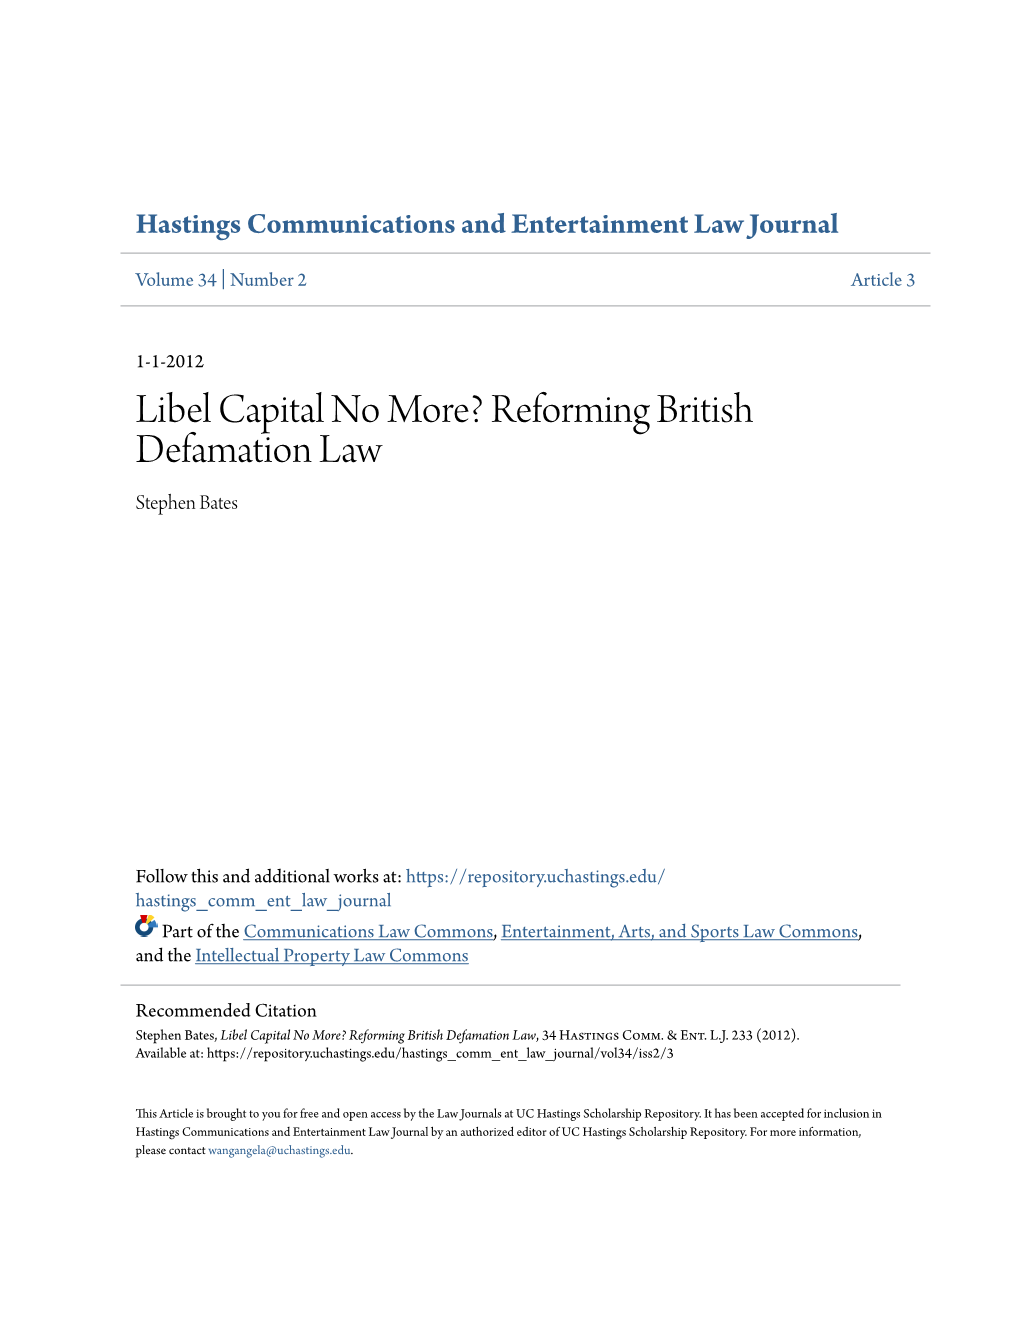 Reforming British Defamation Law Stephen Bates